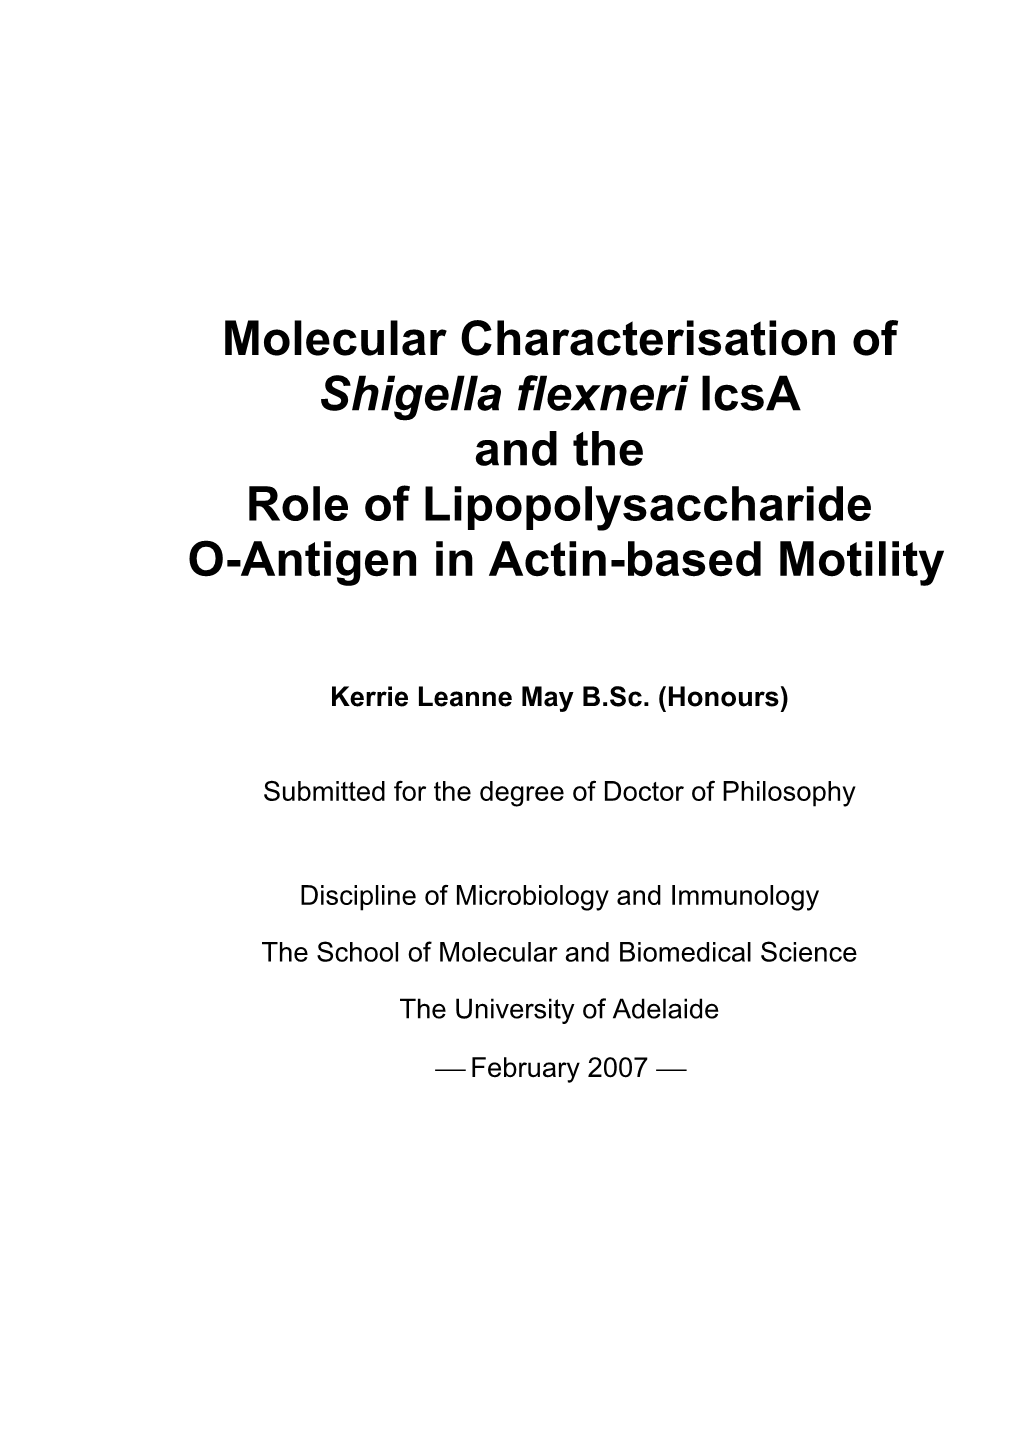 Molecular Characterisation of Shigella Flexneri Icsa and the Role of Lipopolysaccharide O-Antigen in Actin-Based Motility